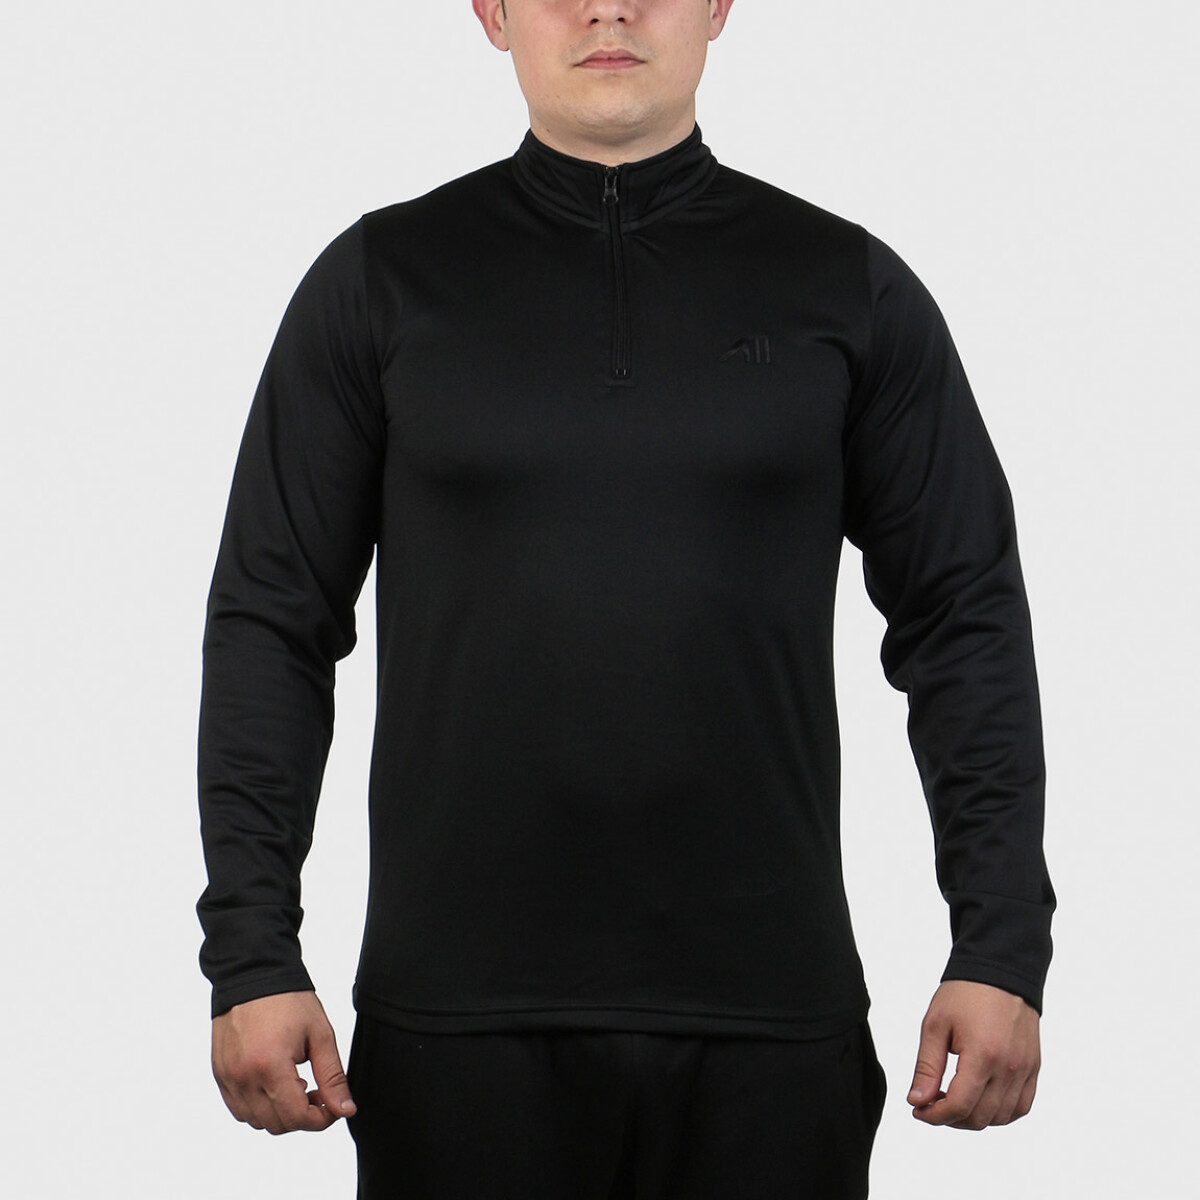 Austral Men Dryfit Training Sweater - Black - Negro 